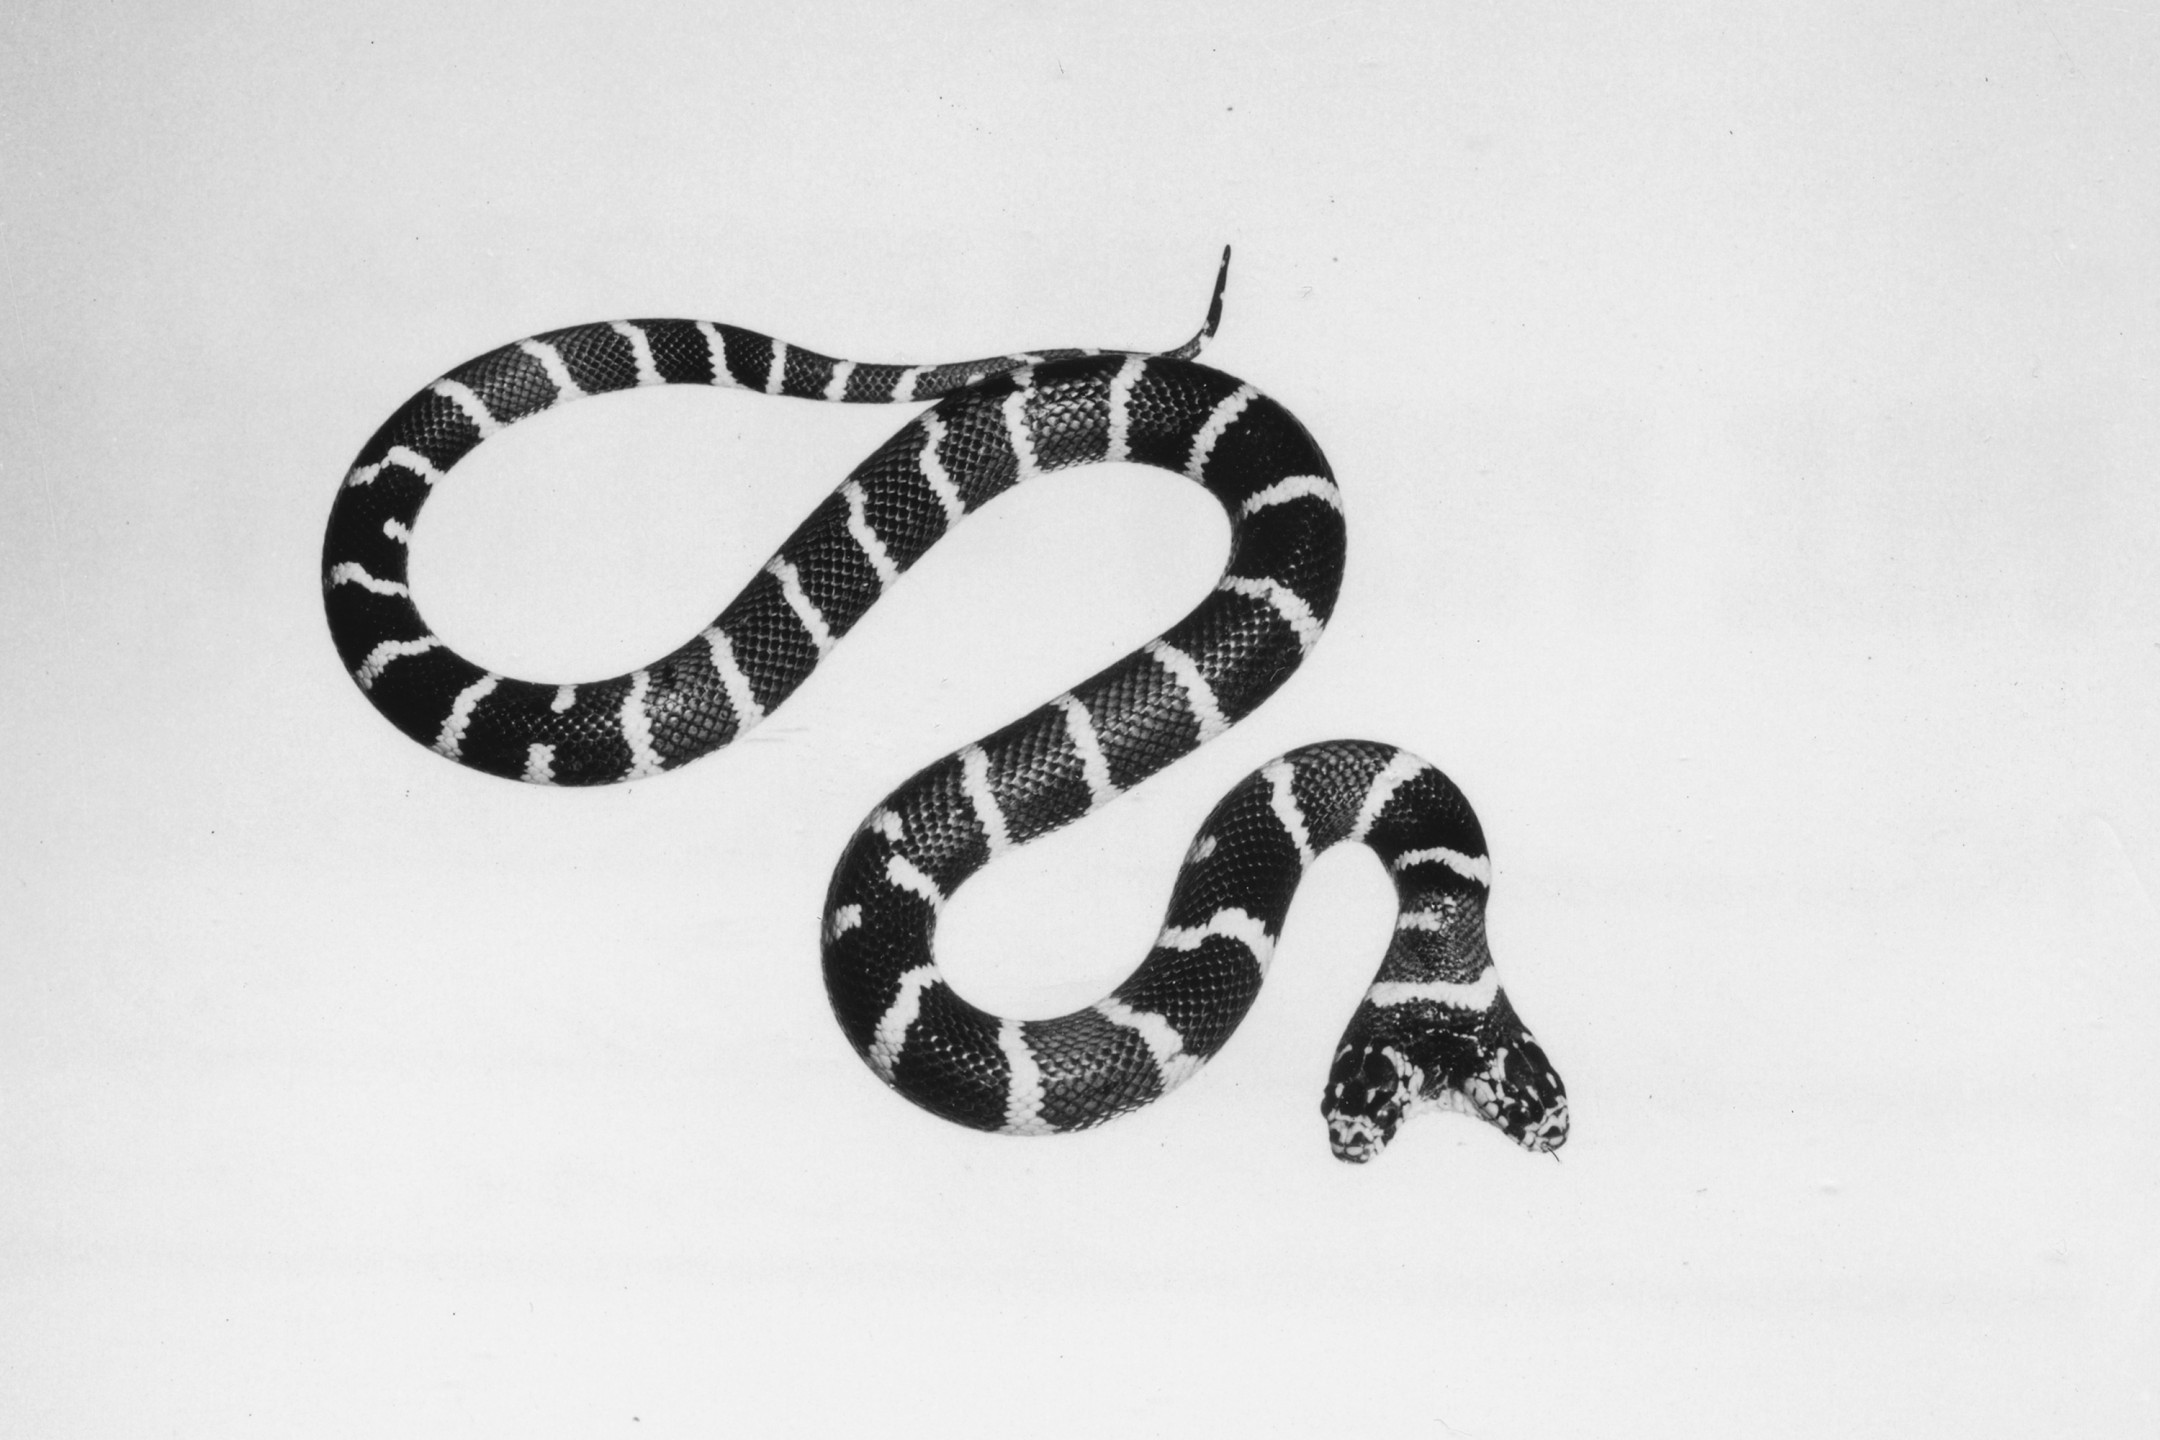 Dudley Duplex, two-headed king snake